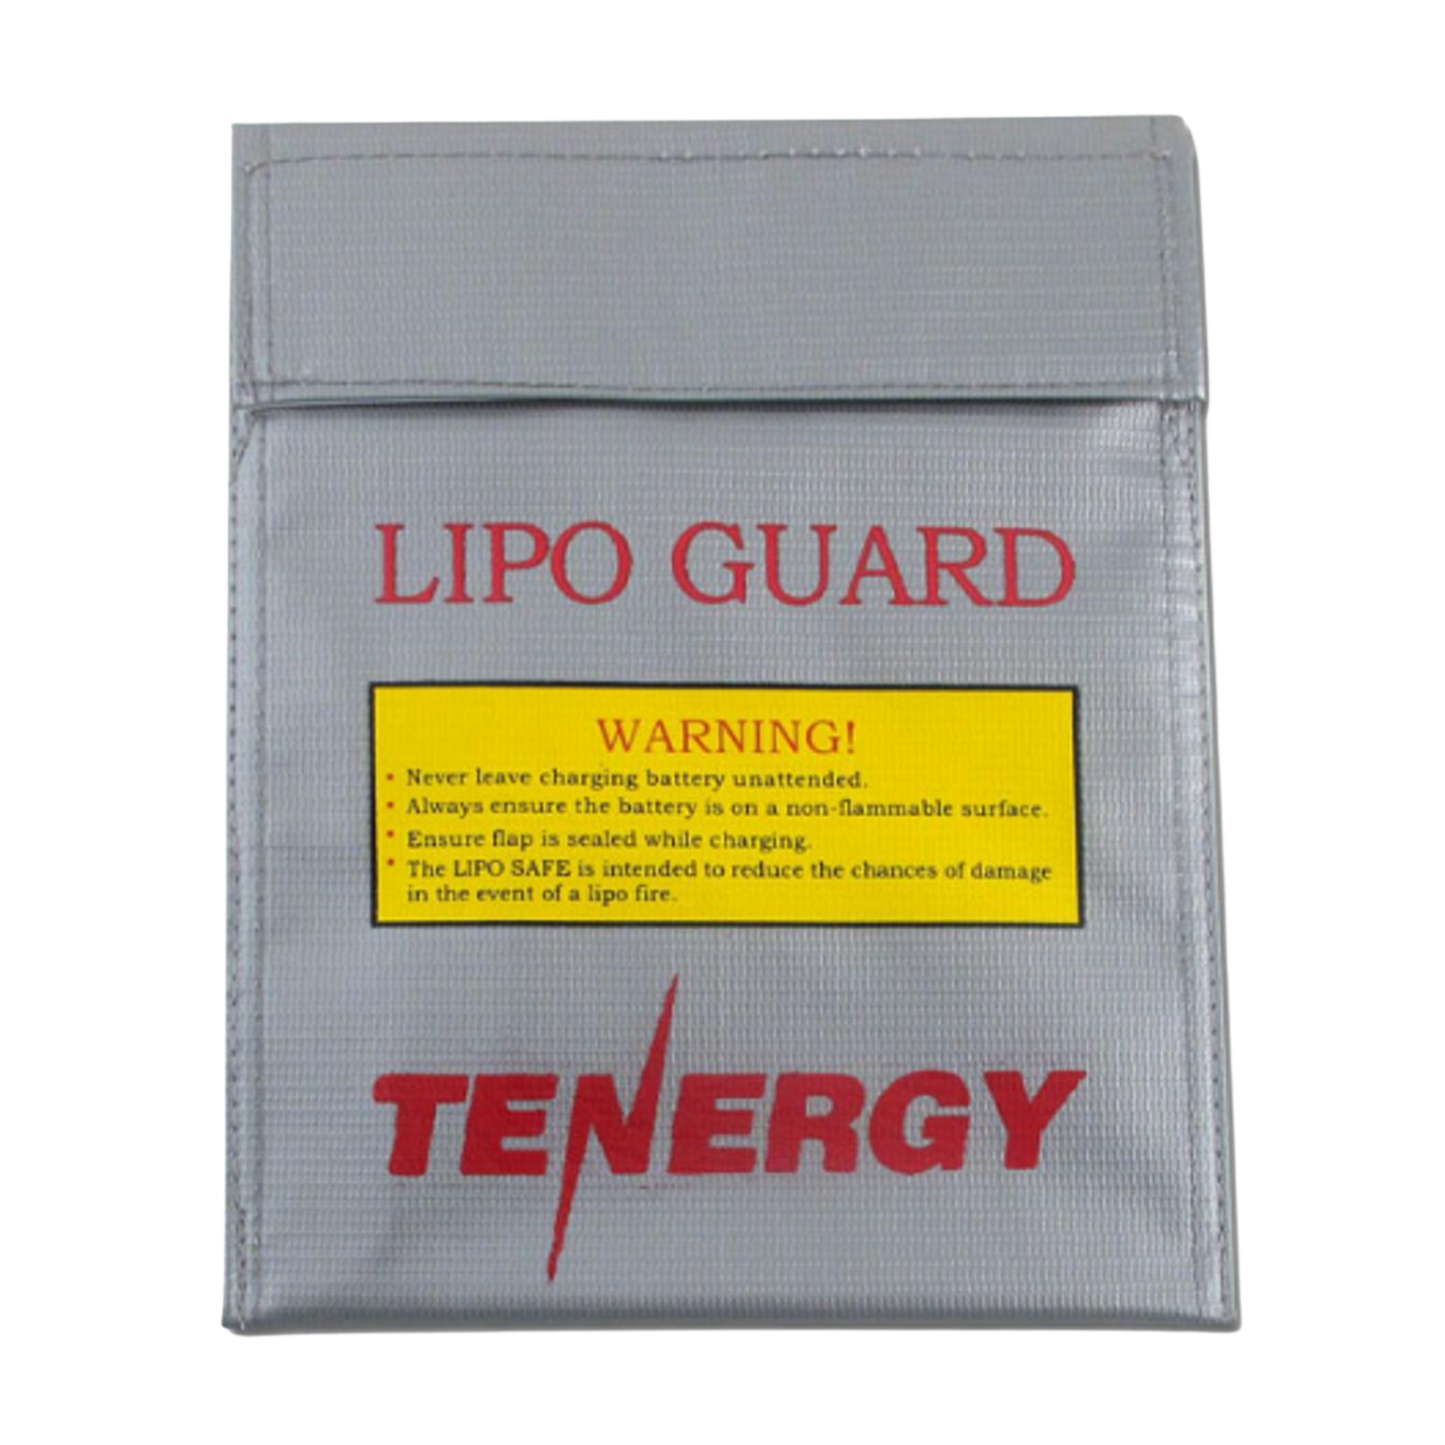 Tenergy LiPo Guard Bag